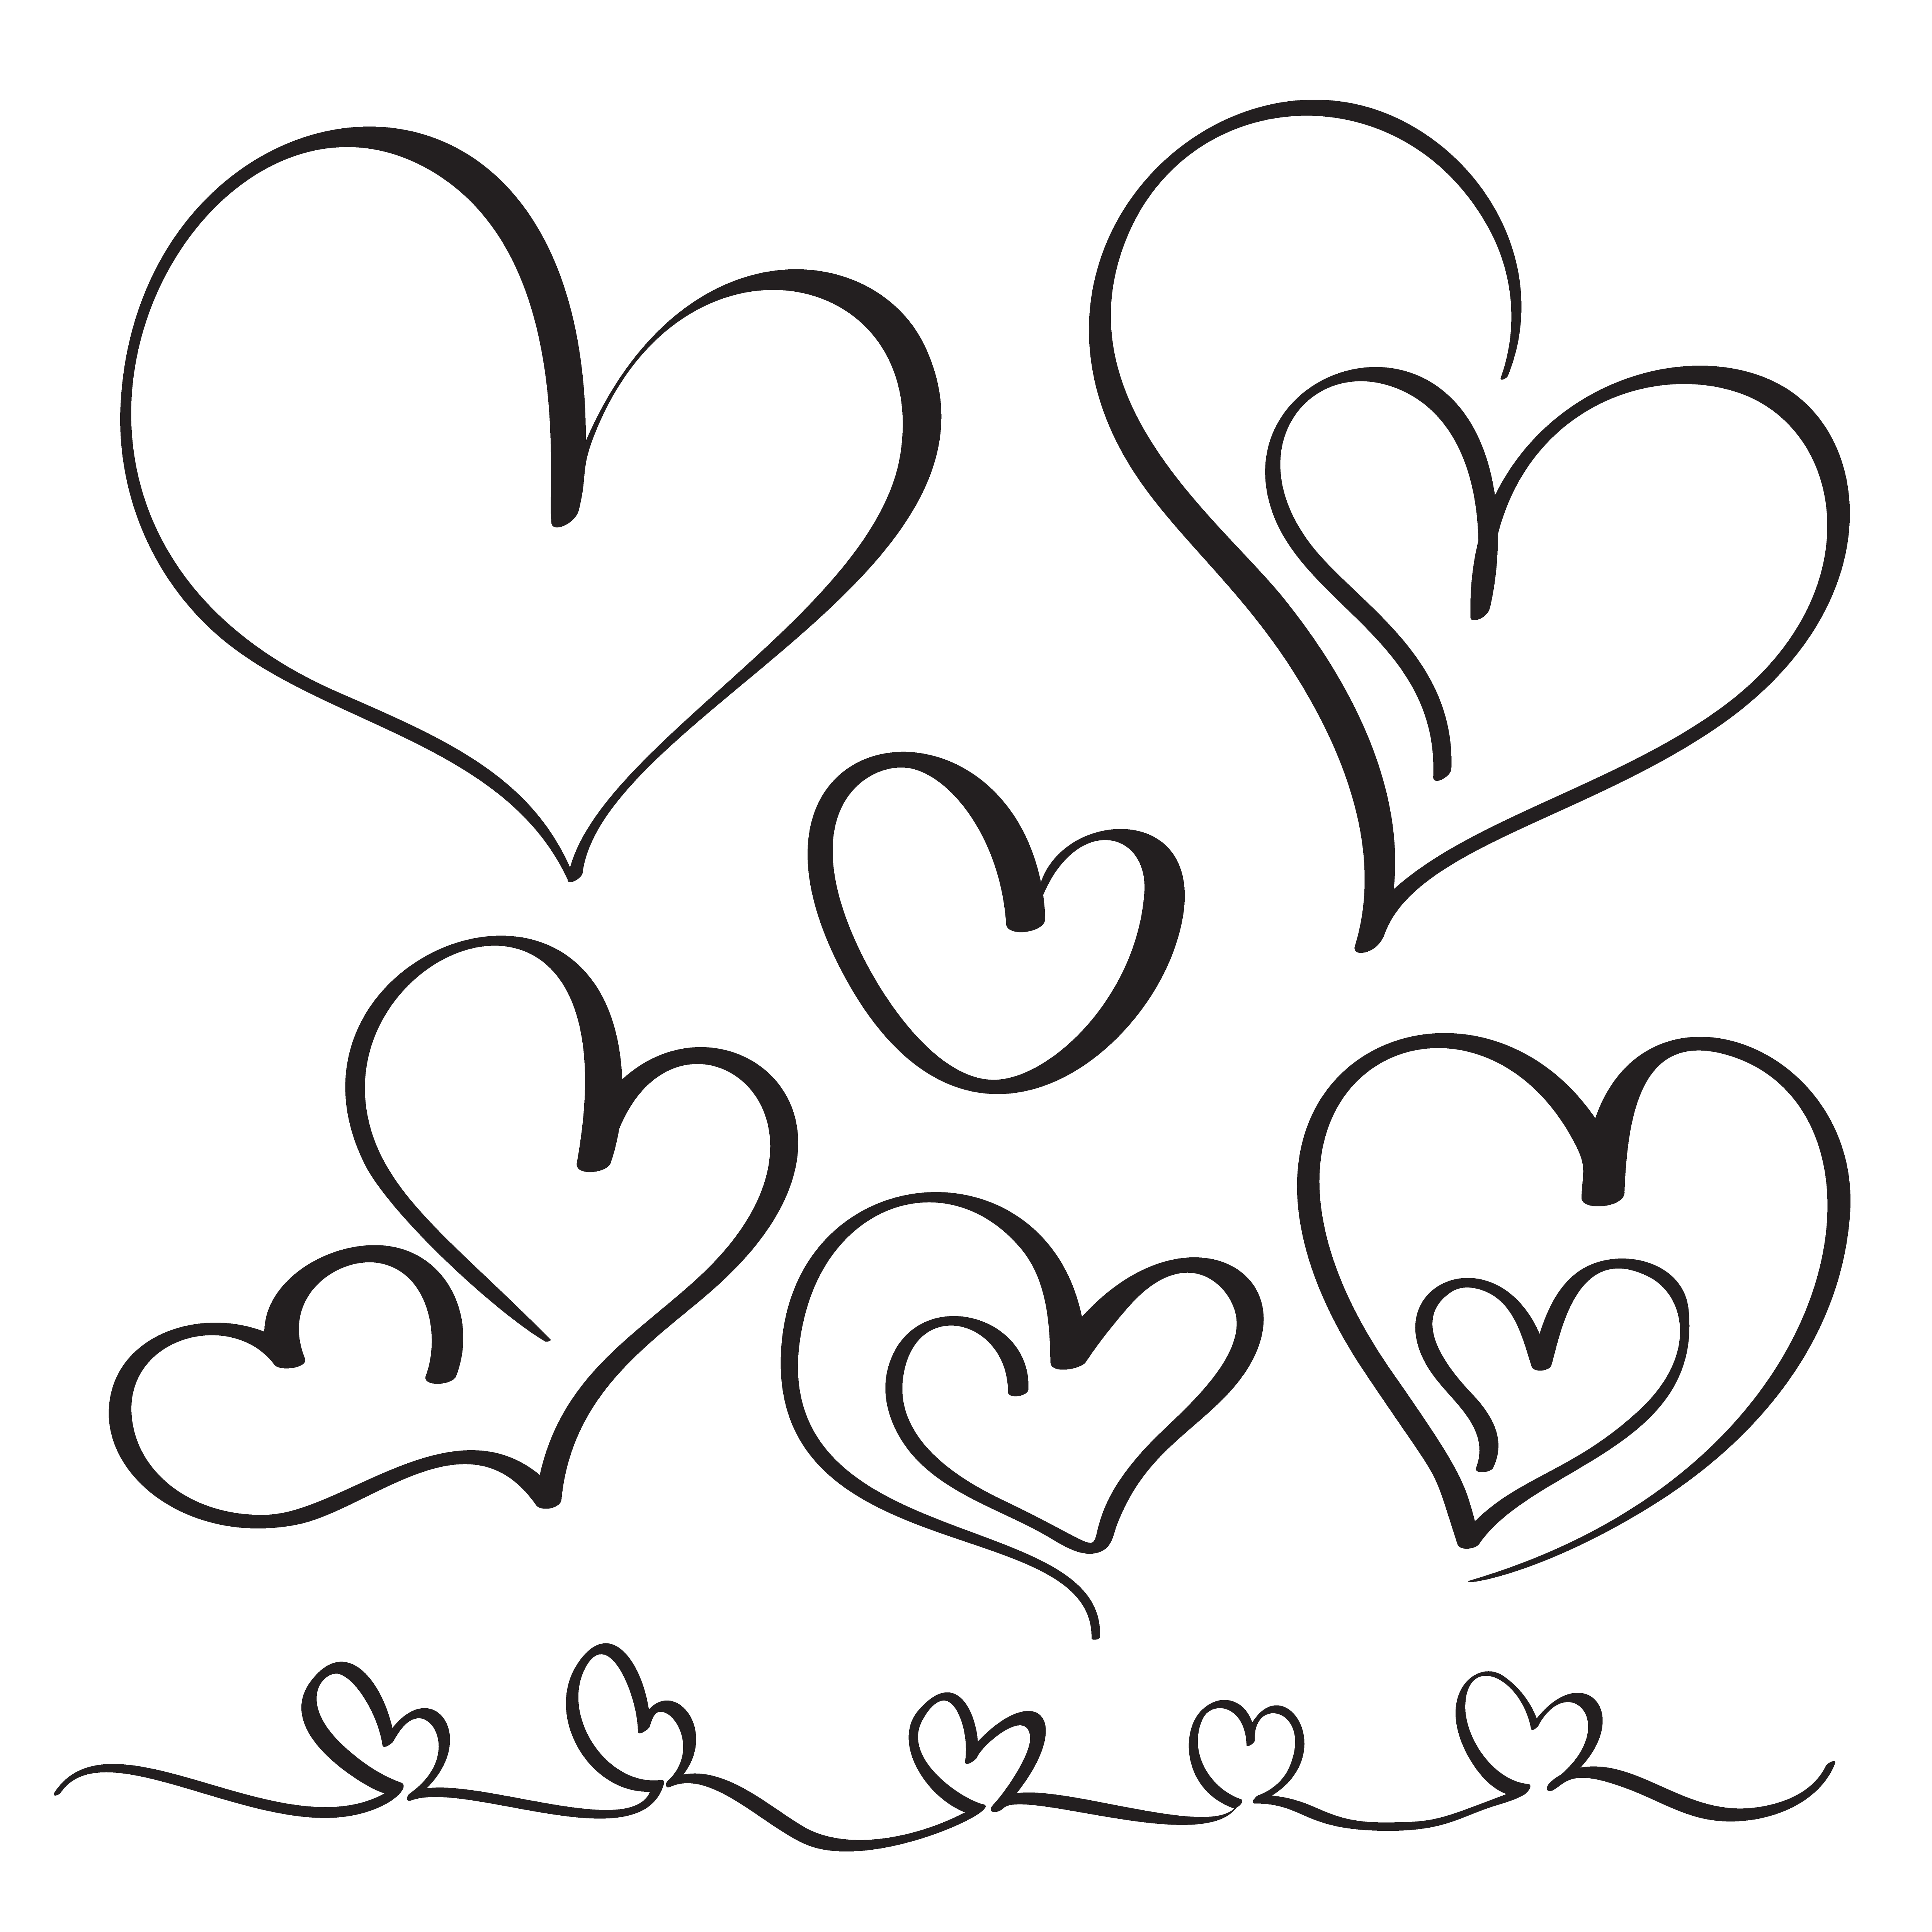 Download set of flourish calligraphy vintage hearts. Illustration vector hand drawn EPS 10 412576 Vector ...